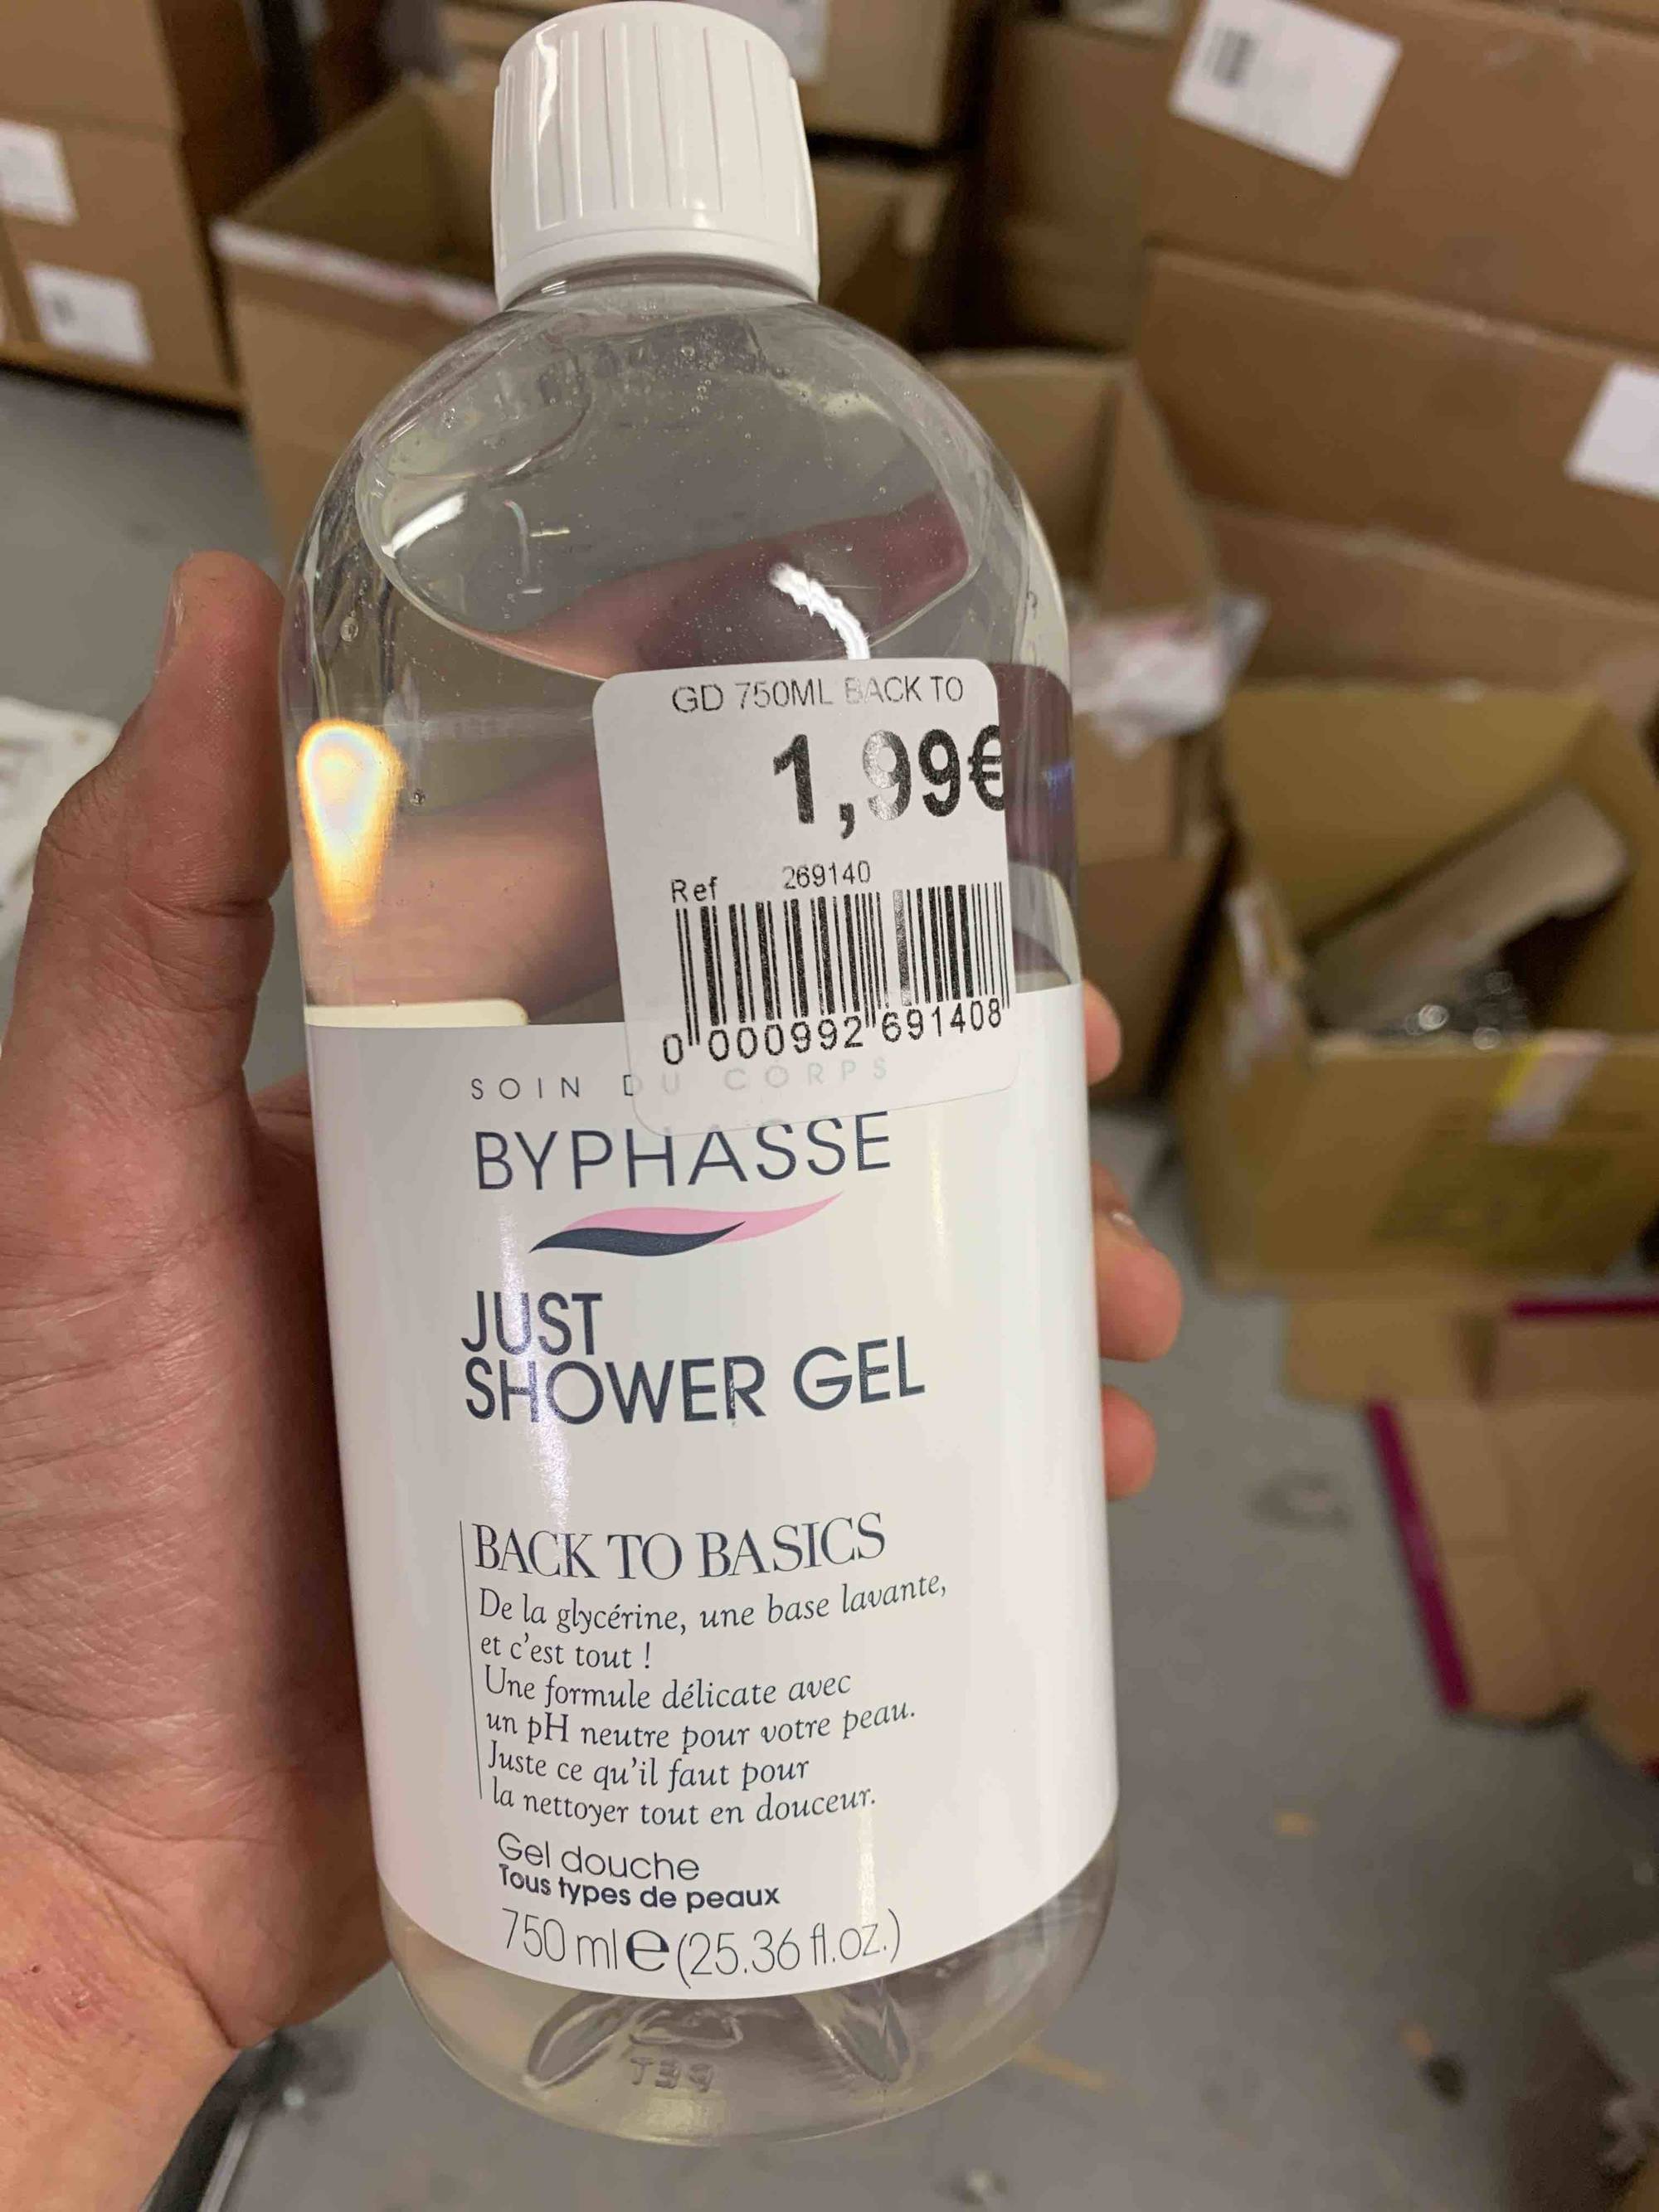 BYPHASSE - Just shower gel